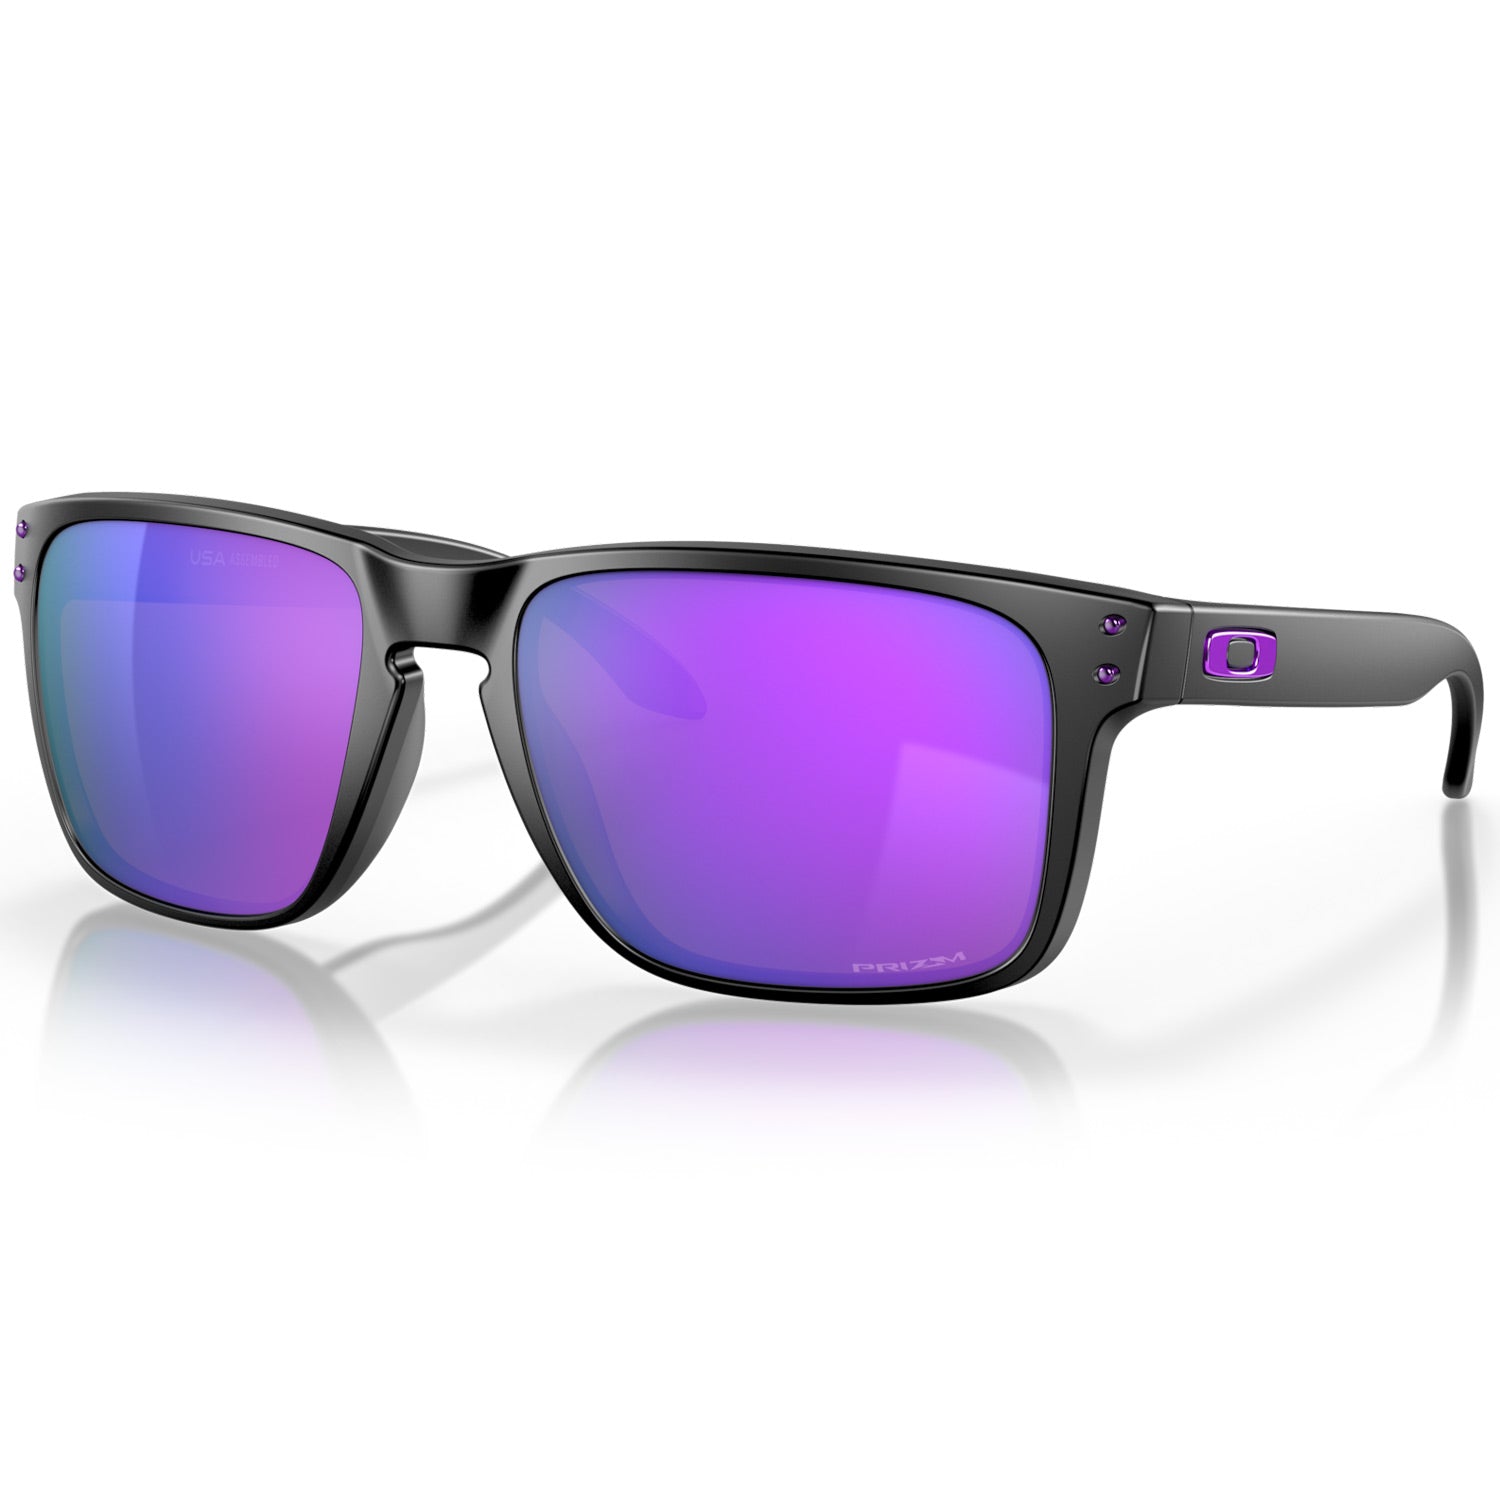 Oakley Holbrook XL Sunglasses - Matte Black/Prizm Violet - Square/Rectangular Sunglasses by Oakley